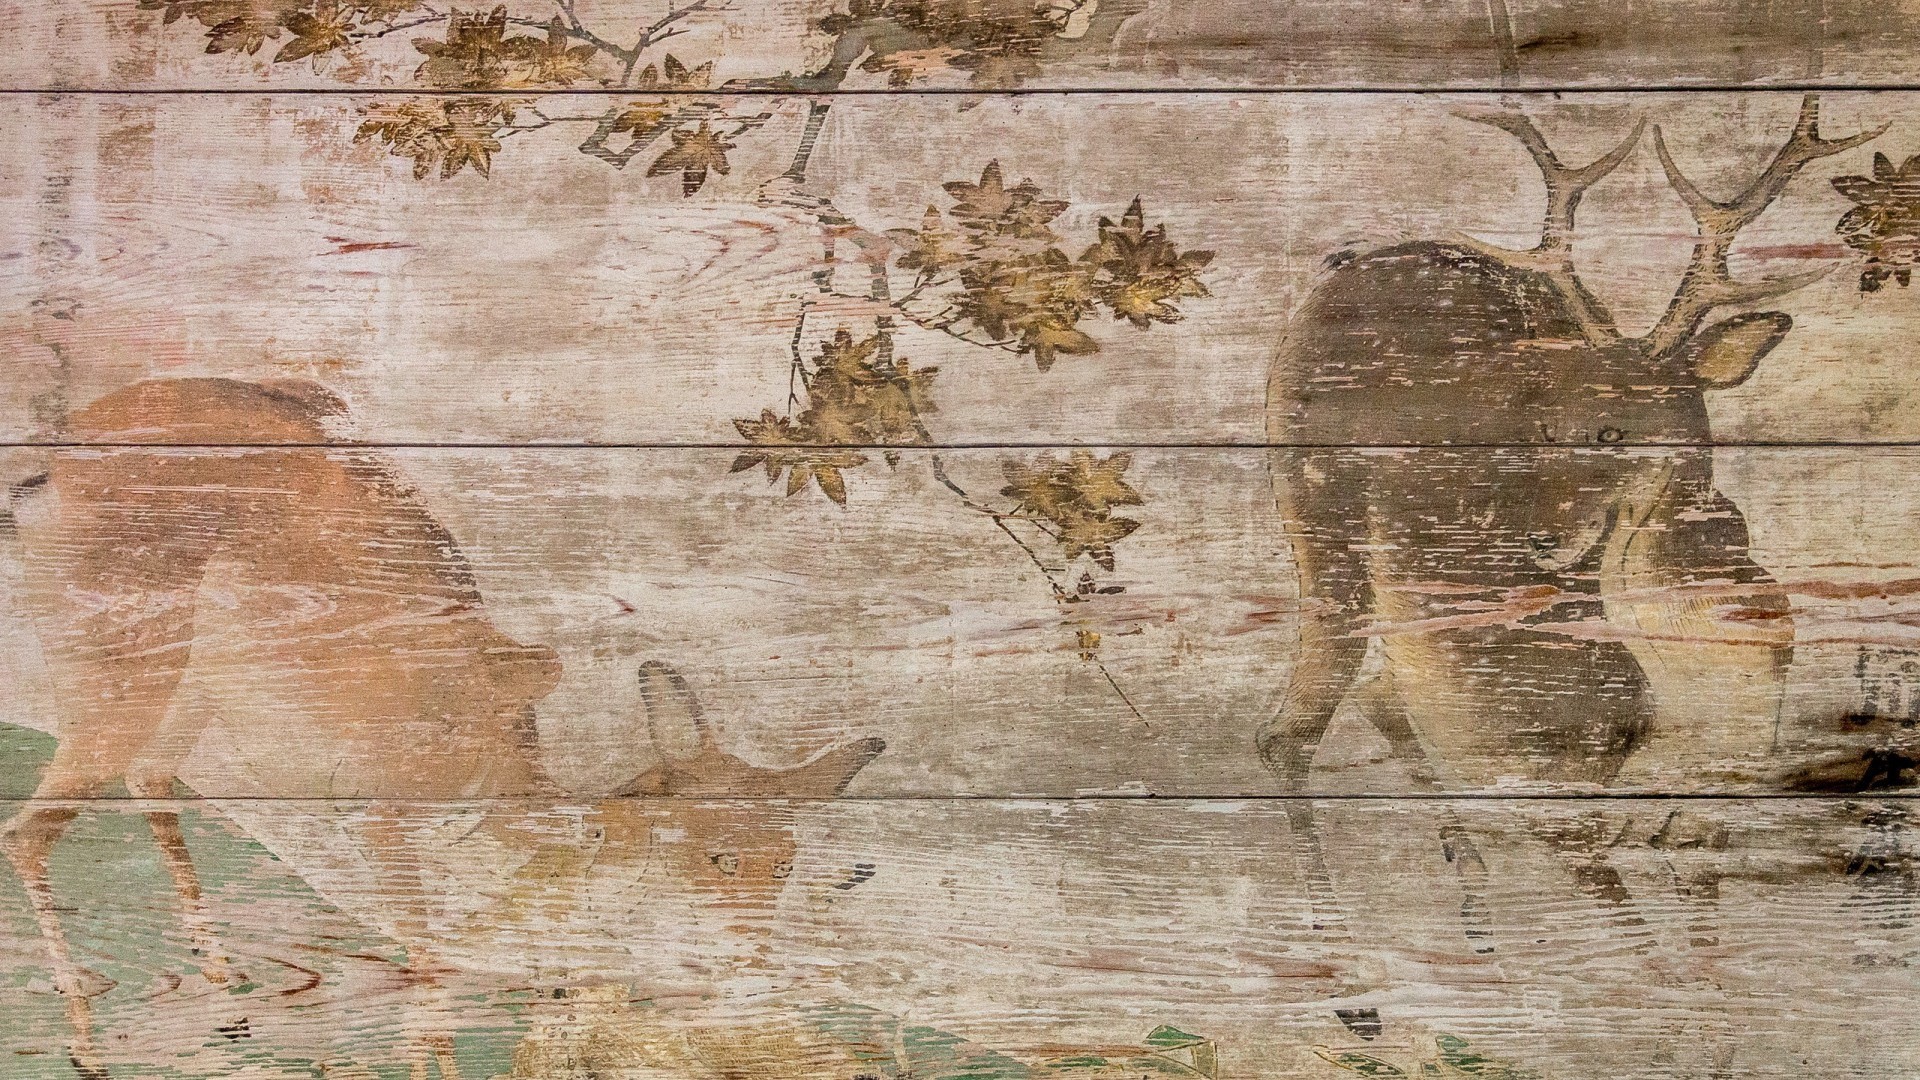 General 1920x1080 nature wooden surface leaves digital art branch painting animals planks deer wood beige